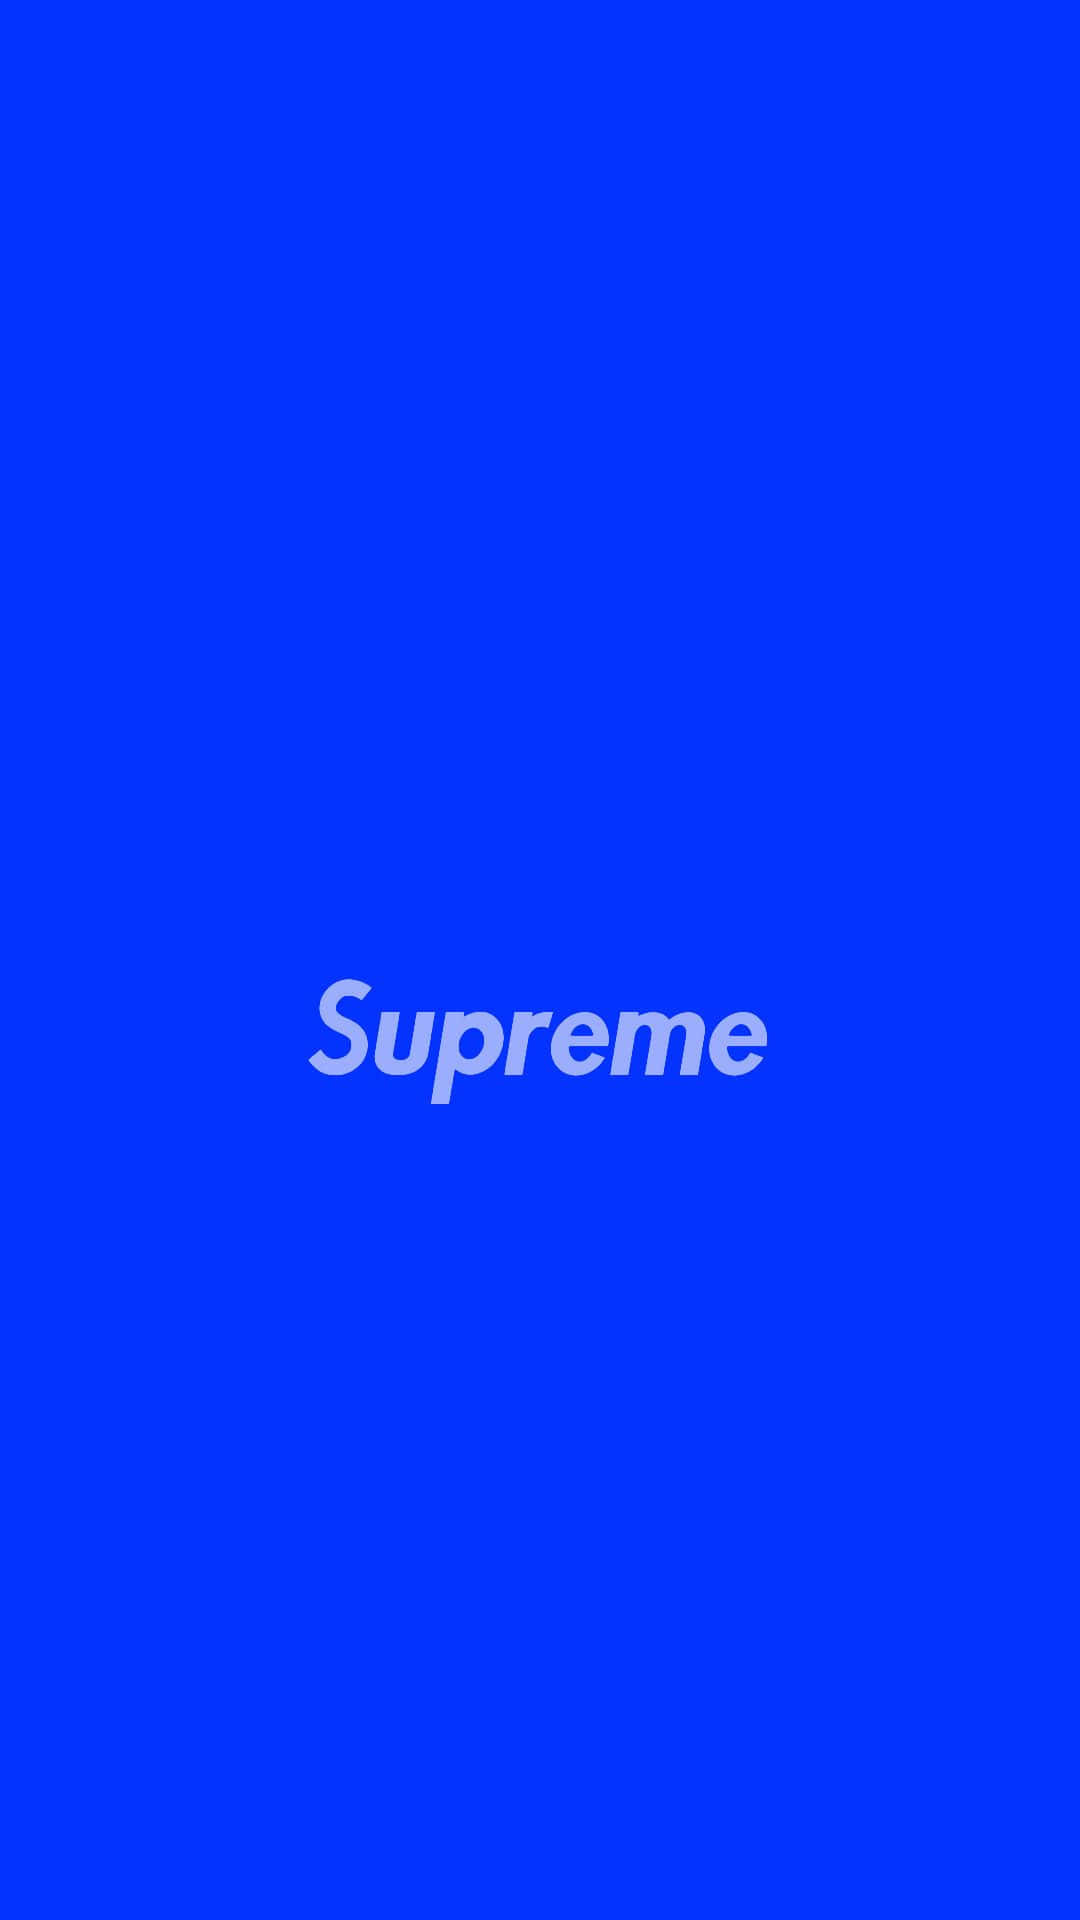 Supreme Logo On A Blue Background